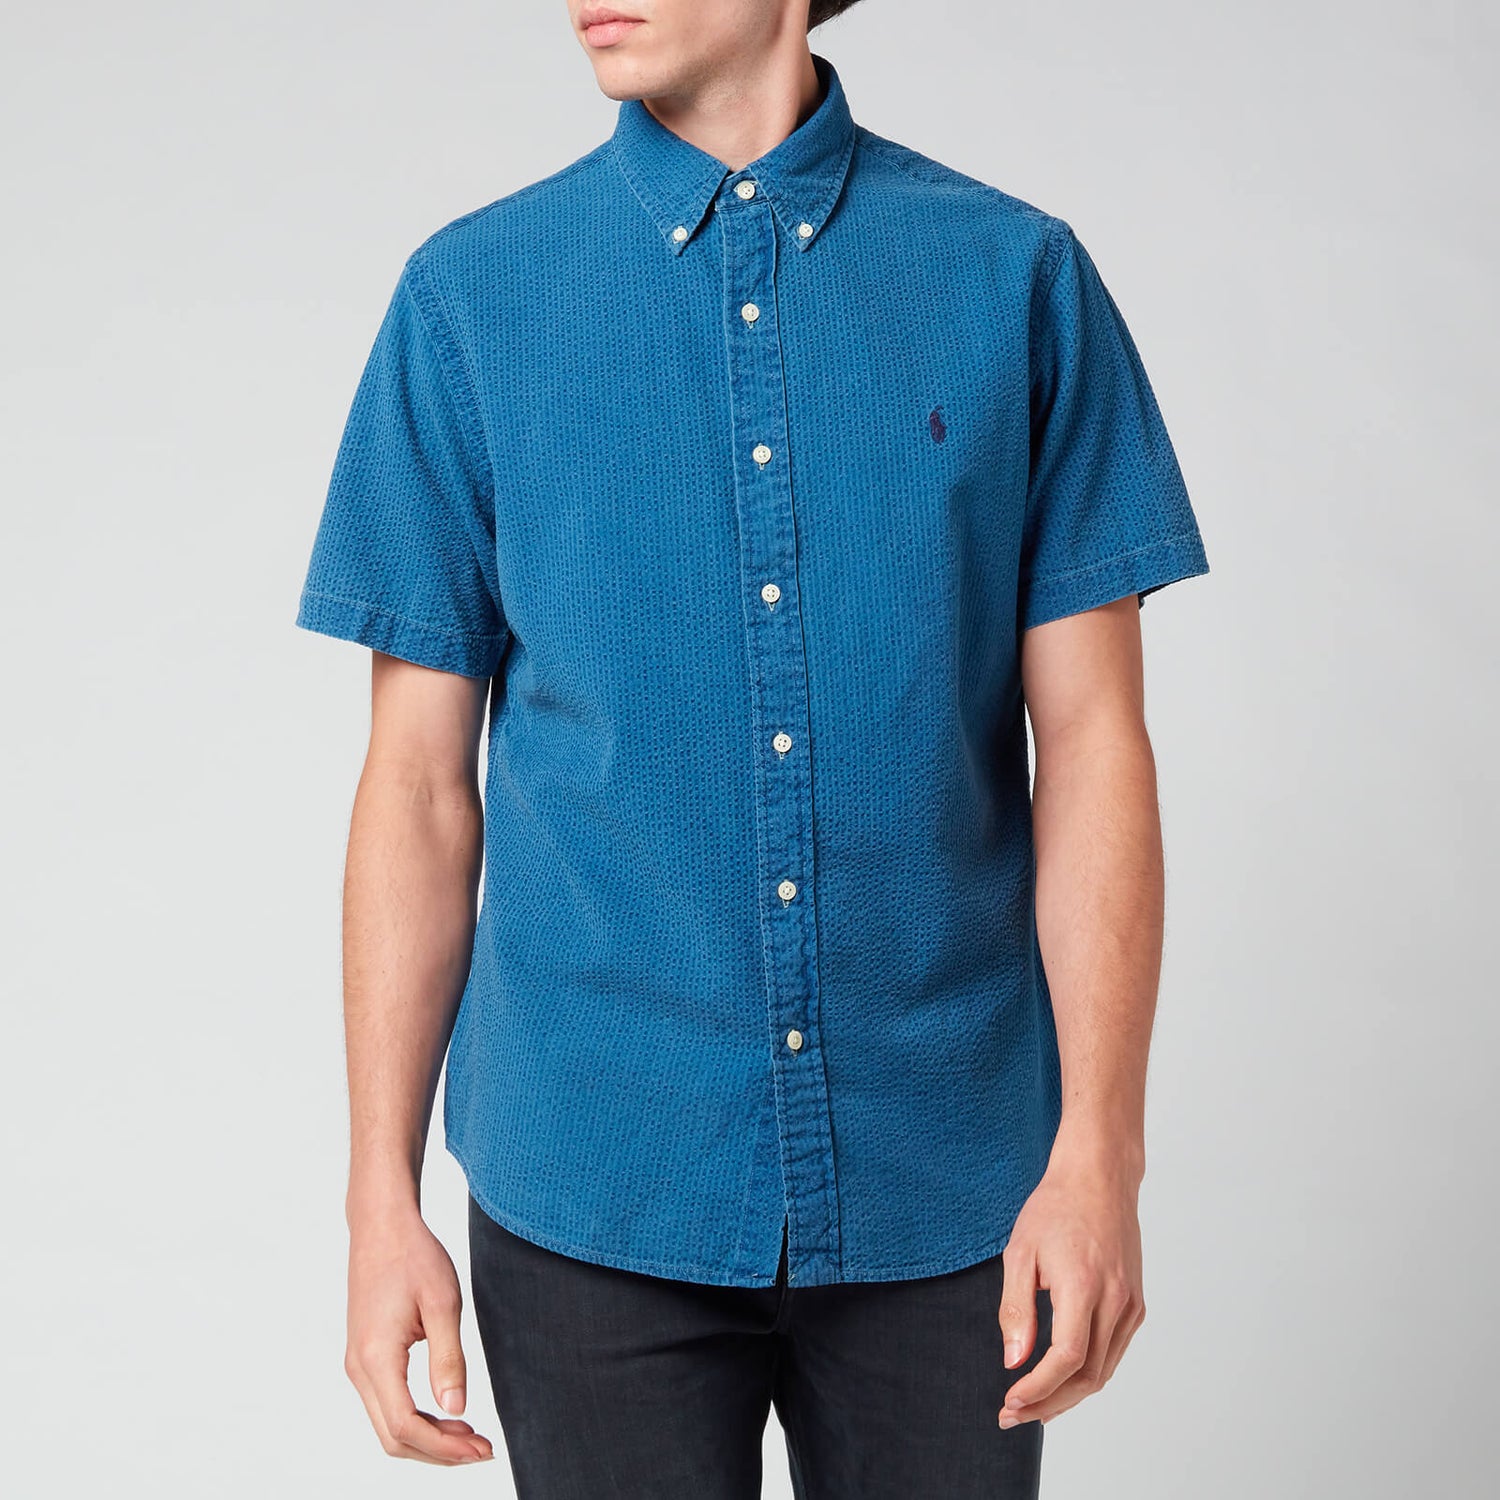 Polo Ralph Lauren Men's Custom Fit Seersucker Shirt - Indigo Blue